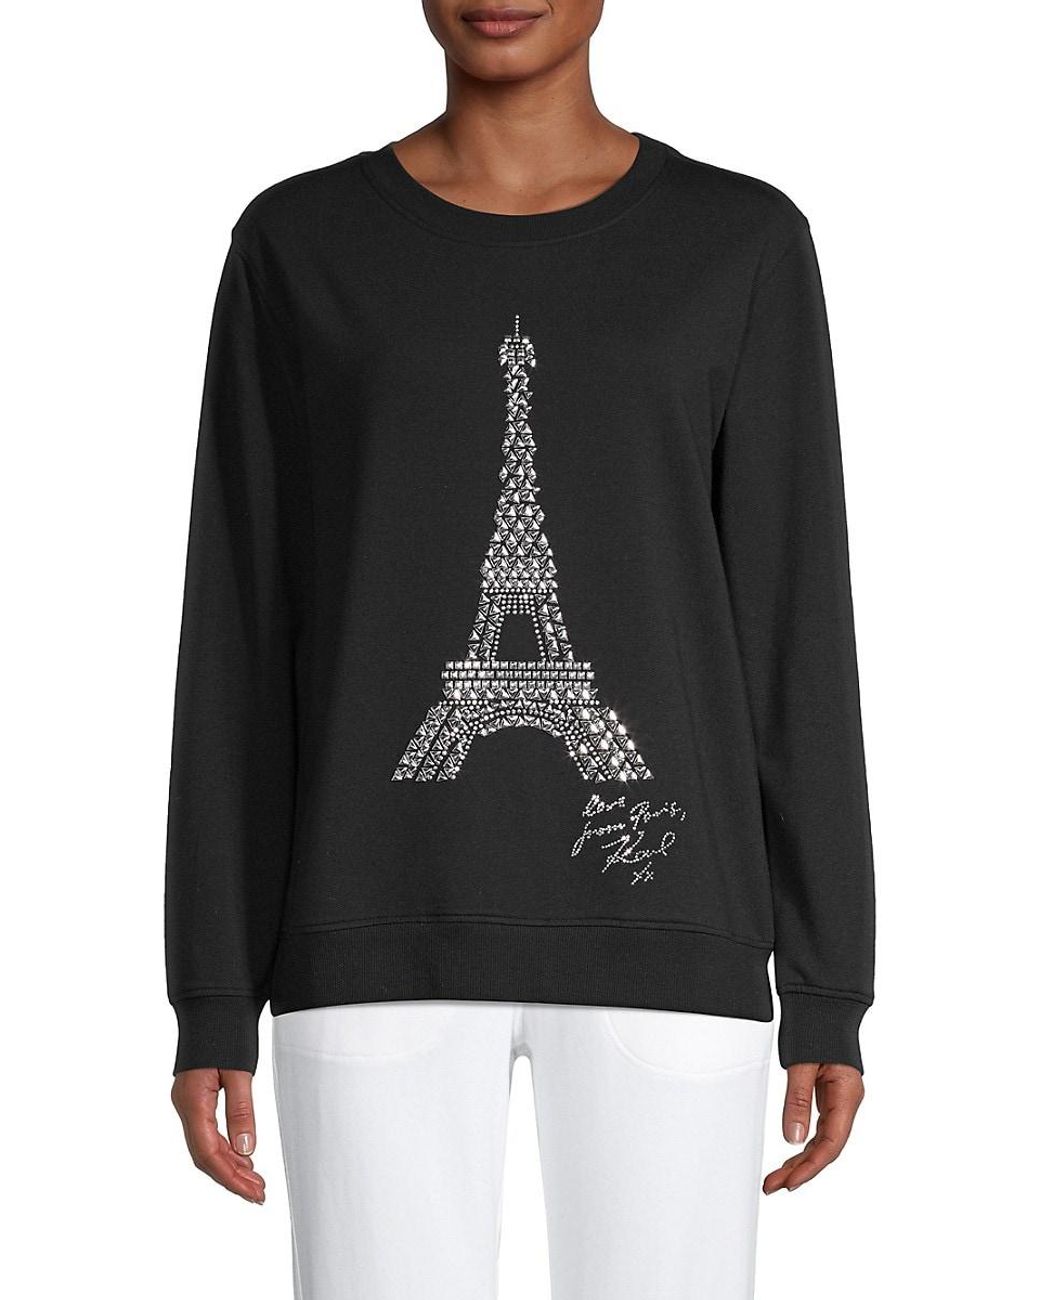 Tower | Eiffel Sweatshirt Lyst Studded Graphic Black Karl Lagerfeld in